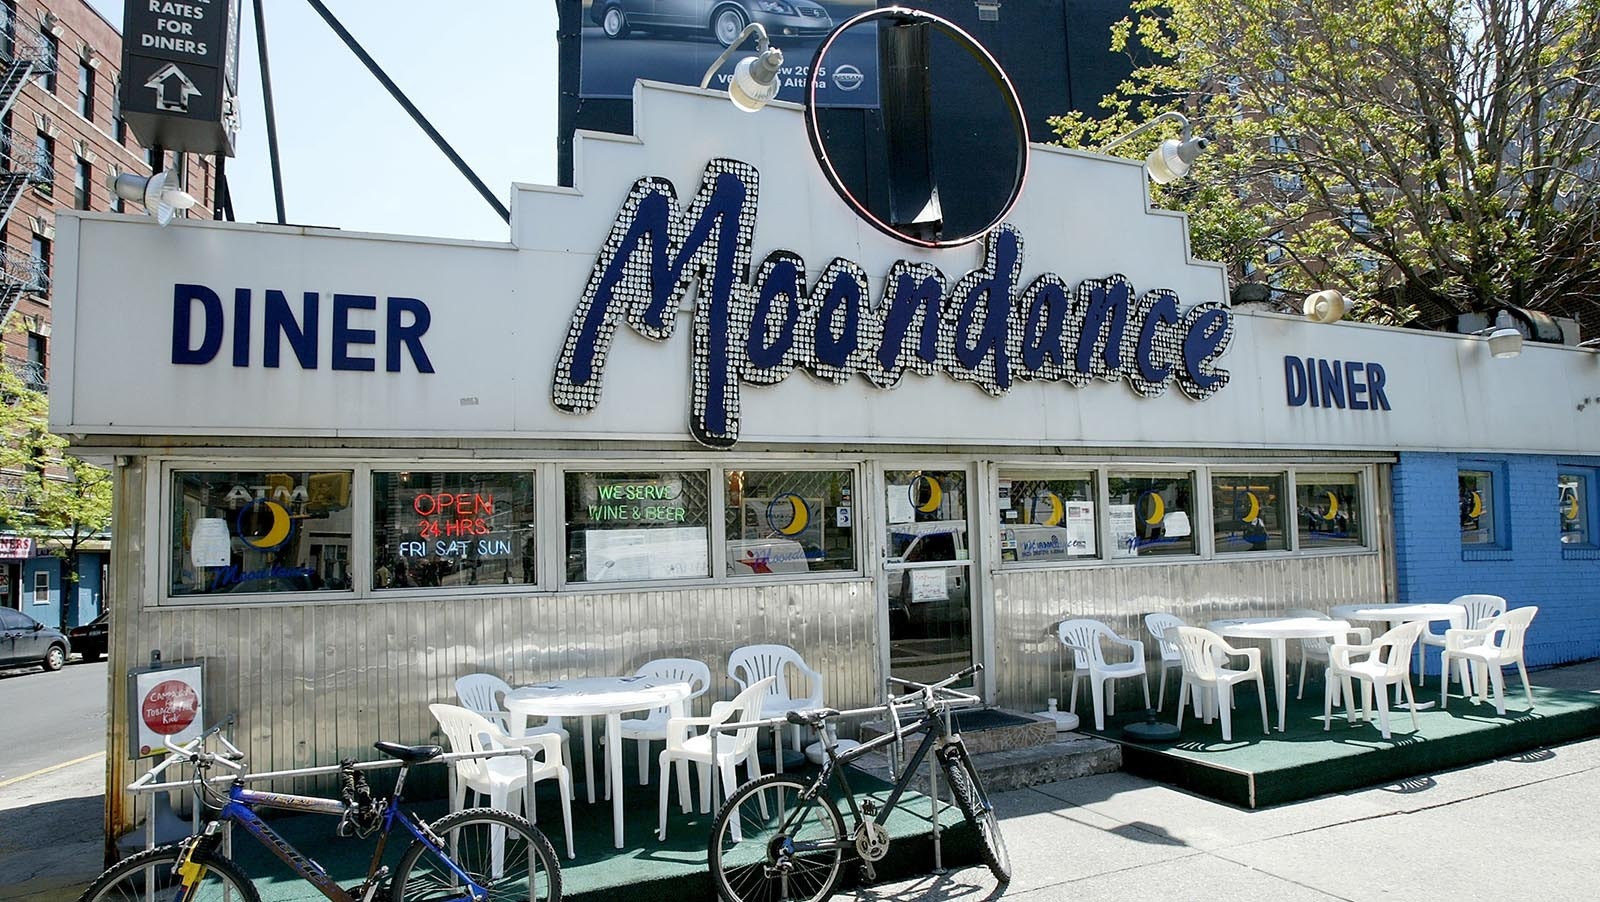 Moondance diner getty 6 17 23